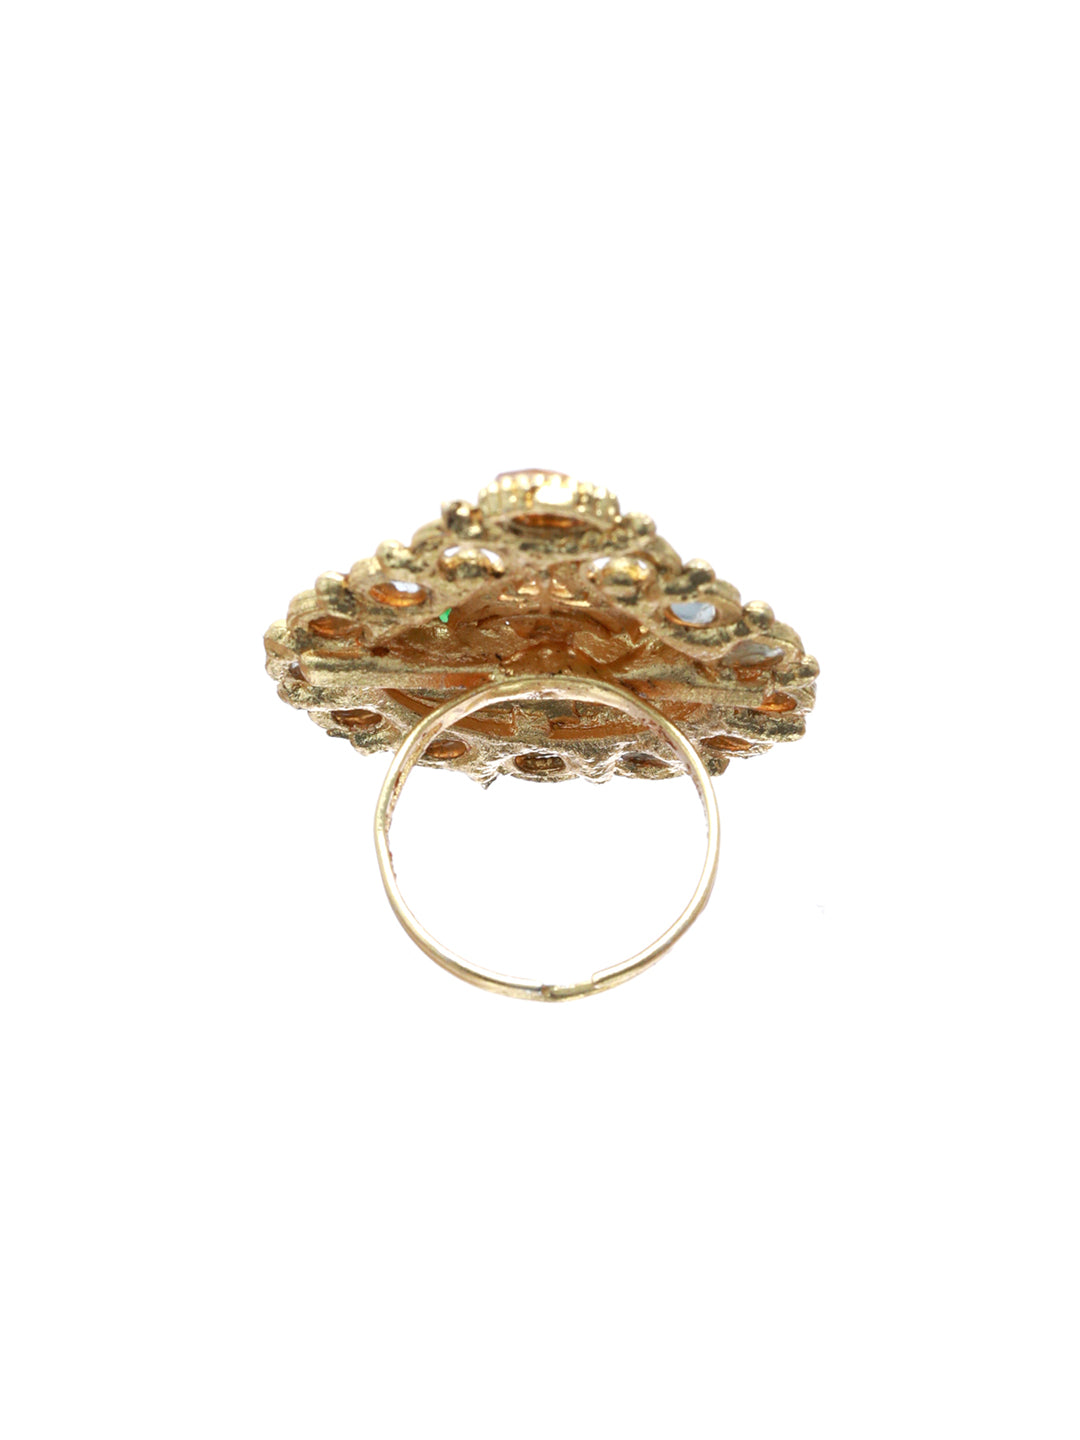 Minakari Jewelry | Bracelets, Earrings, Rings & Necklaces